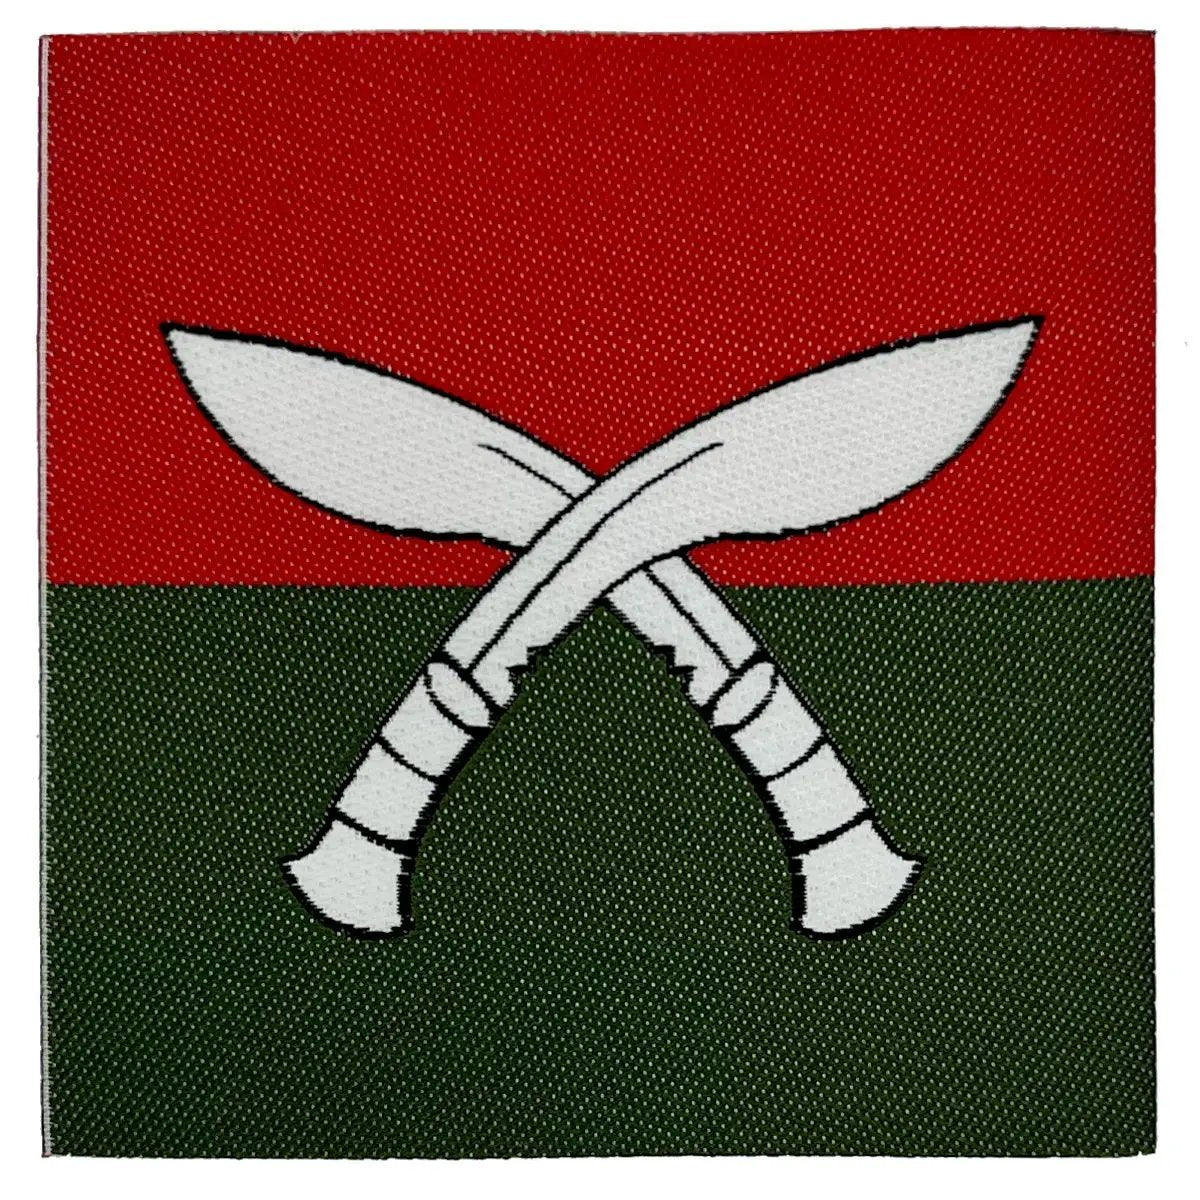 Brigade of Gurkhas Nepal TRF - Iron or Sewn On Patch - John Bull Clothing